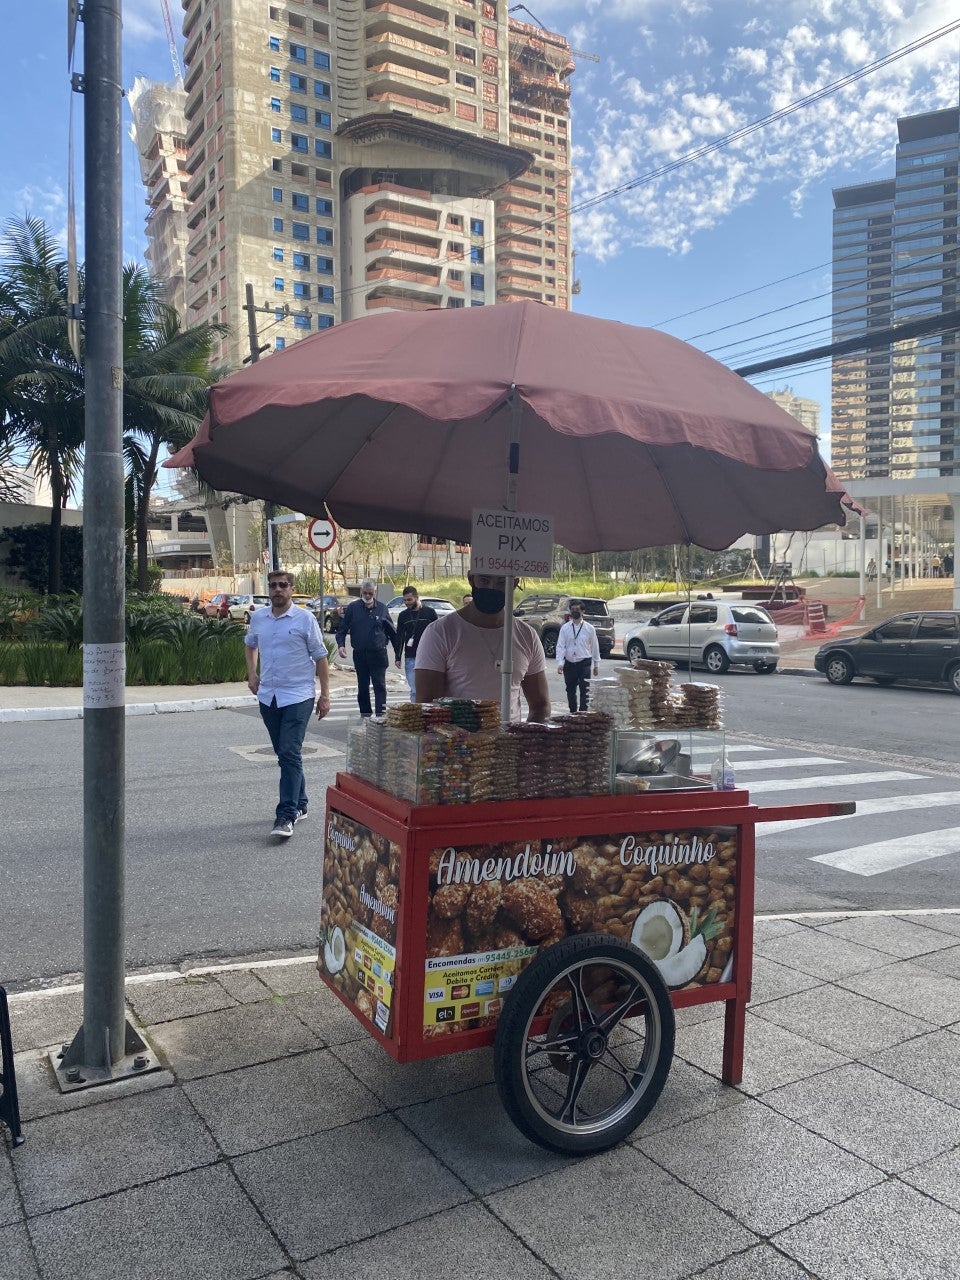 A street food vendor in Brazil